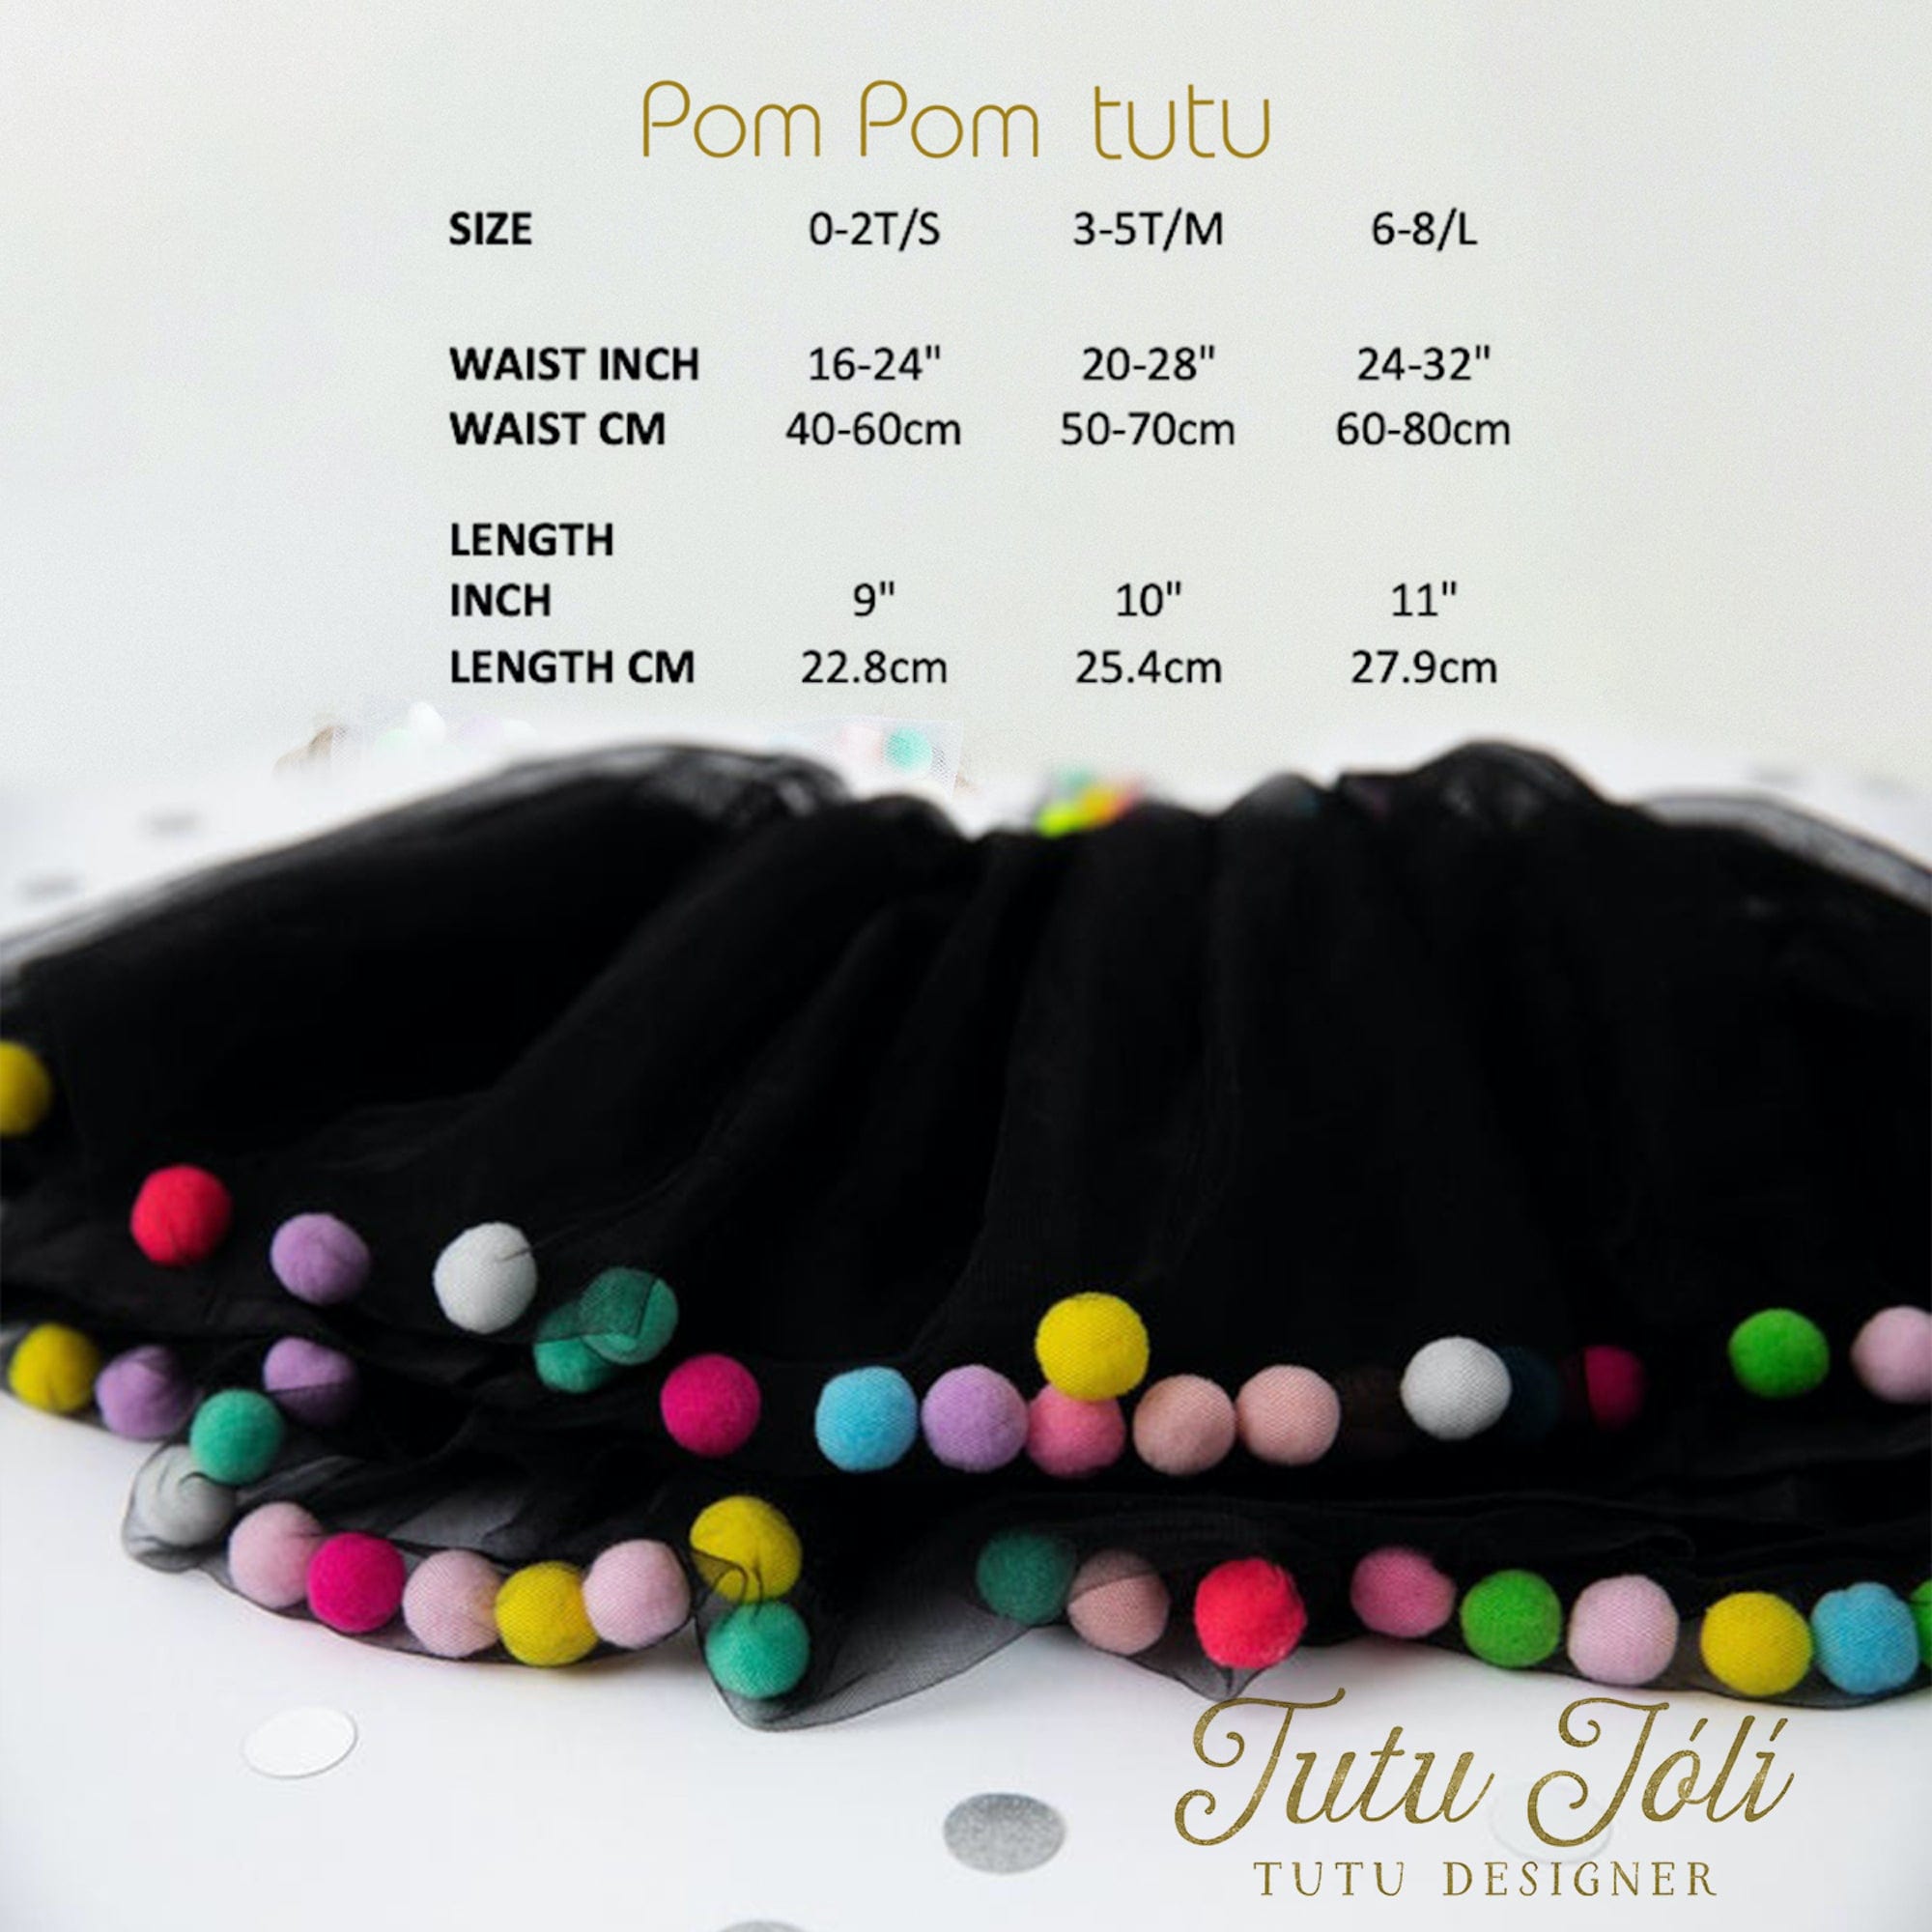 Black Tutu For Girls | Pom Pom Tutu and Bow Hair Tie | 2Pcs Set